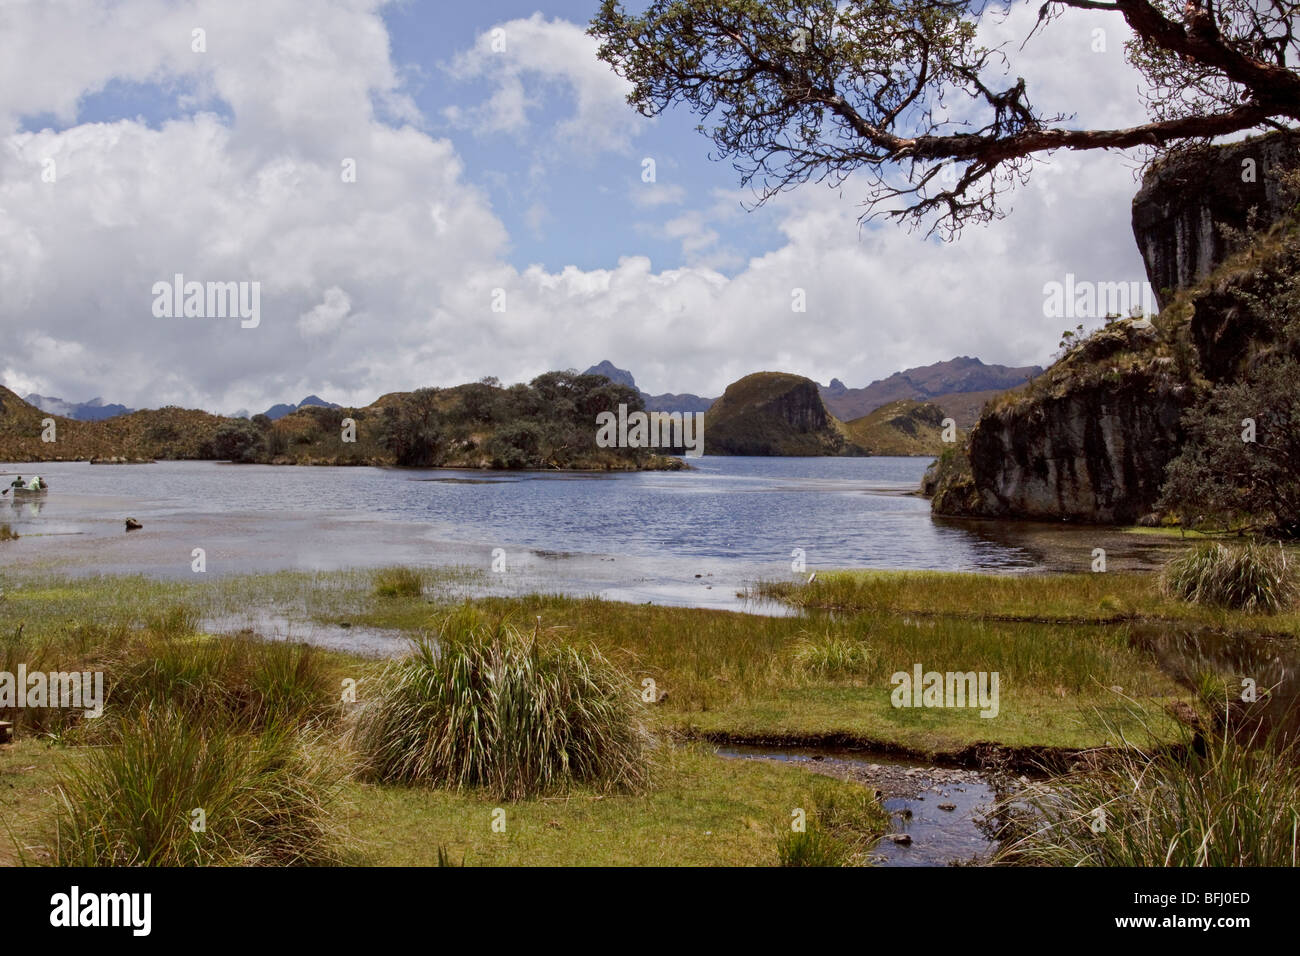 A scenic view of Cajas National Park near Cuenca, Ecuador. Stock Photo